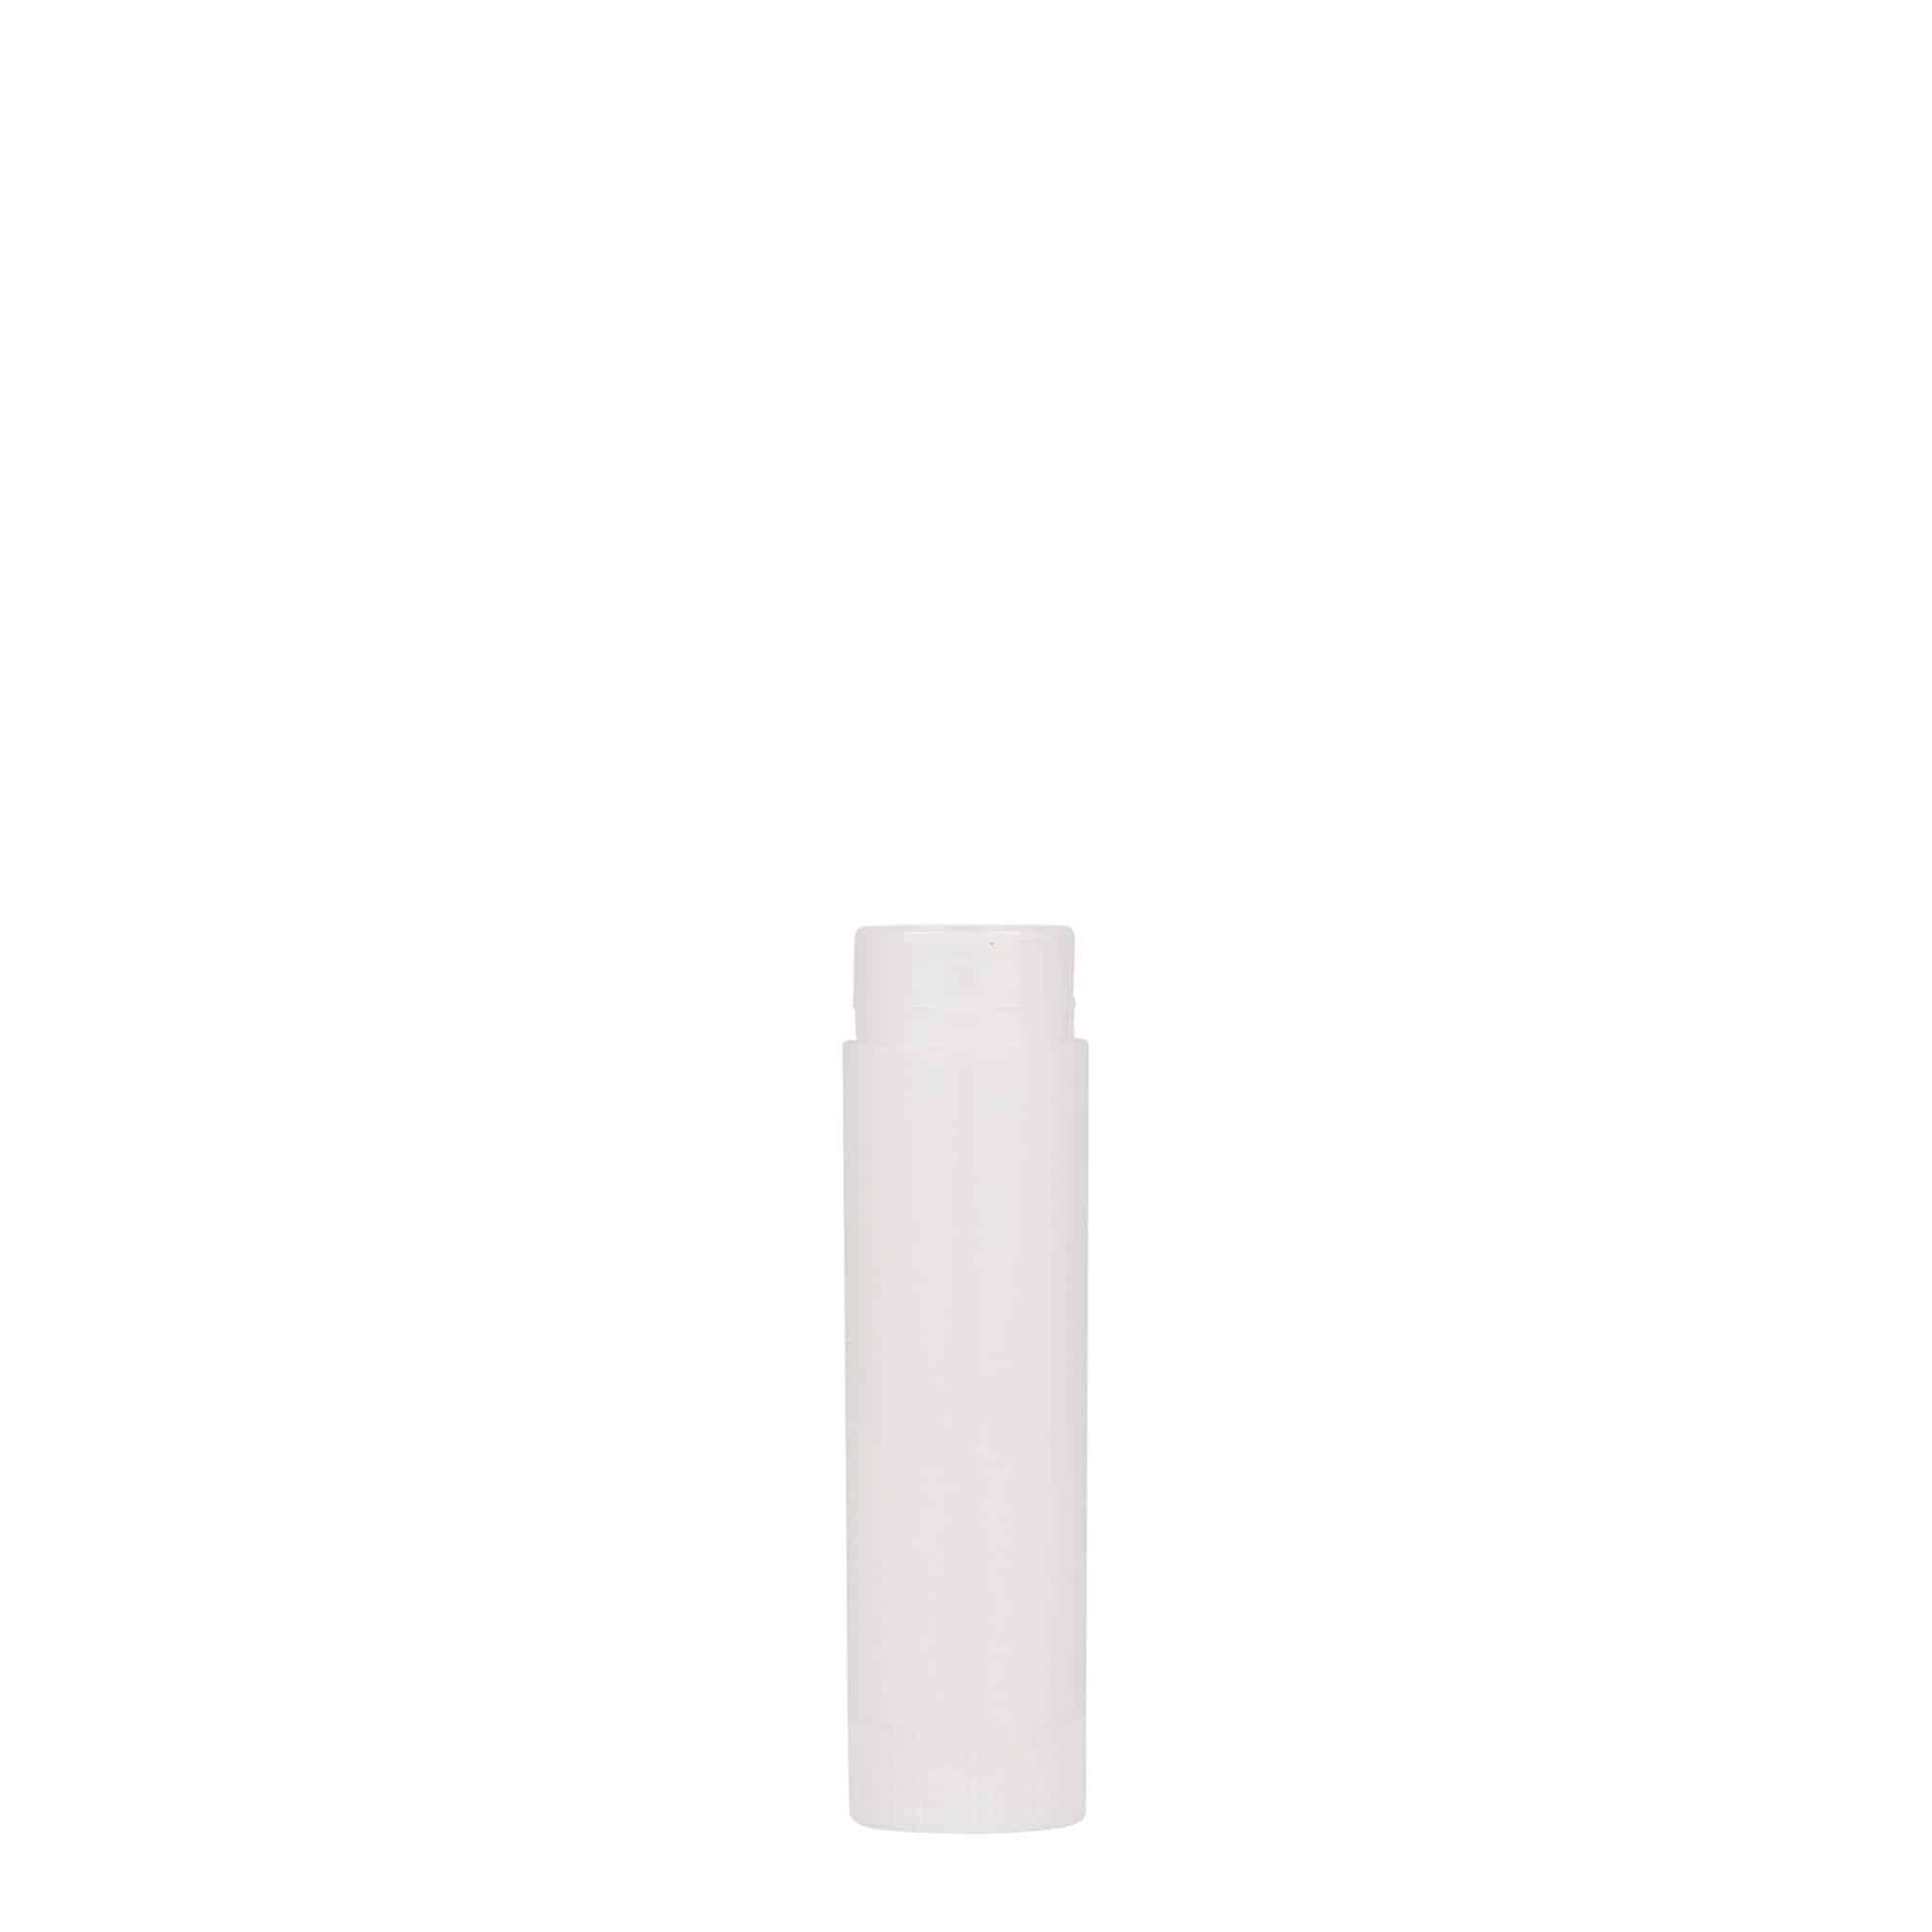 6 ml lipstick container, PP plastic, white